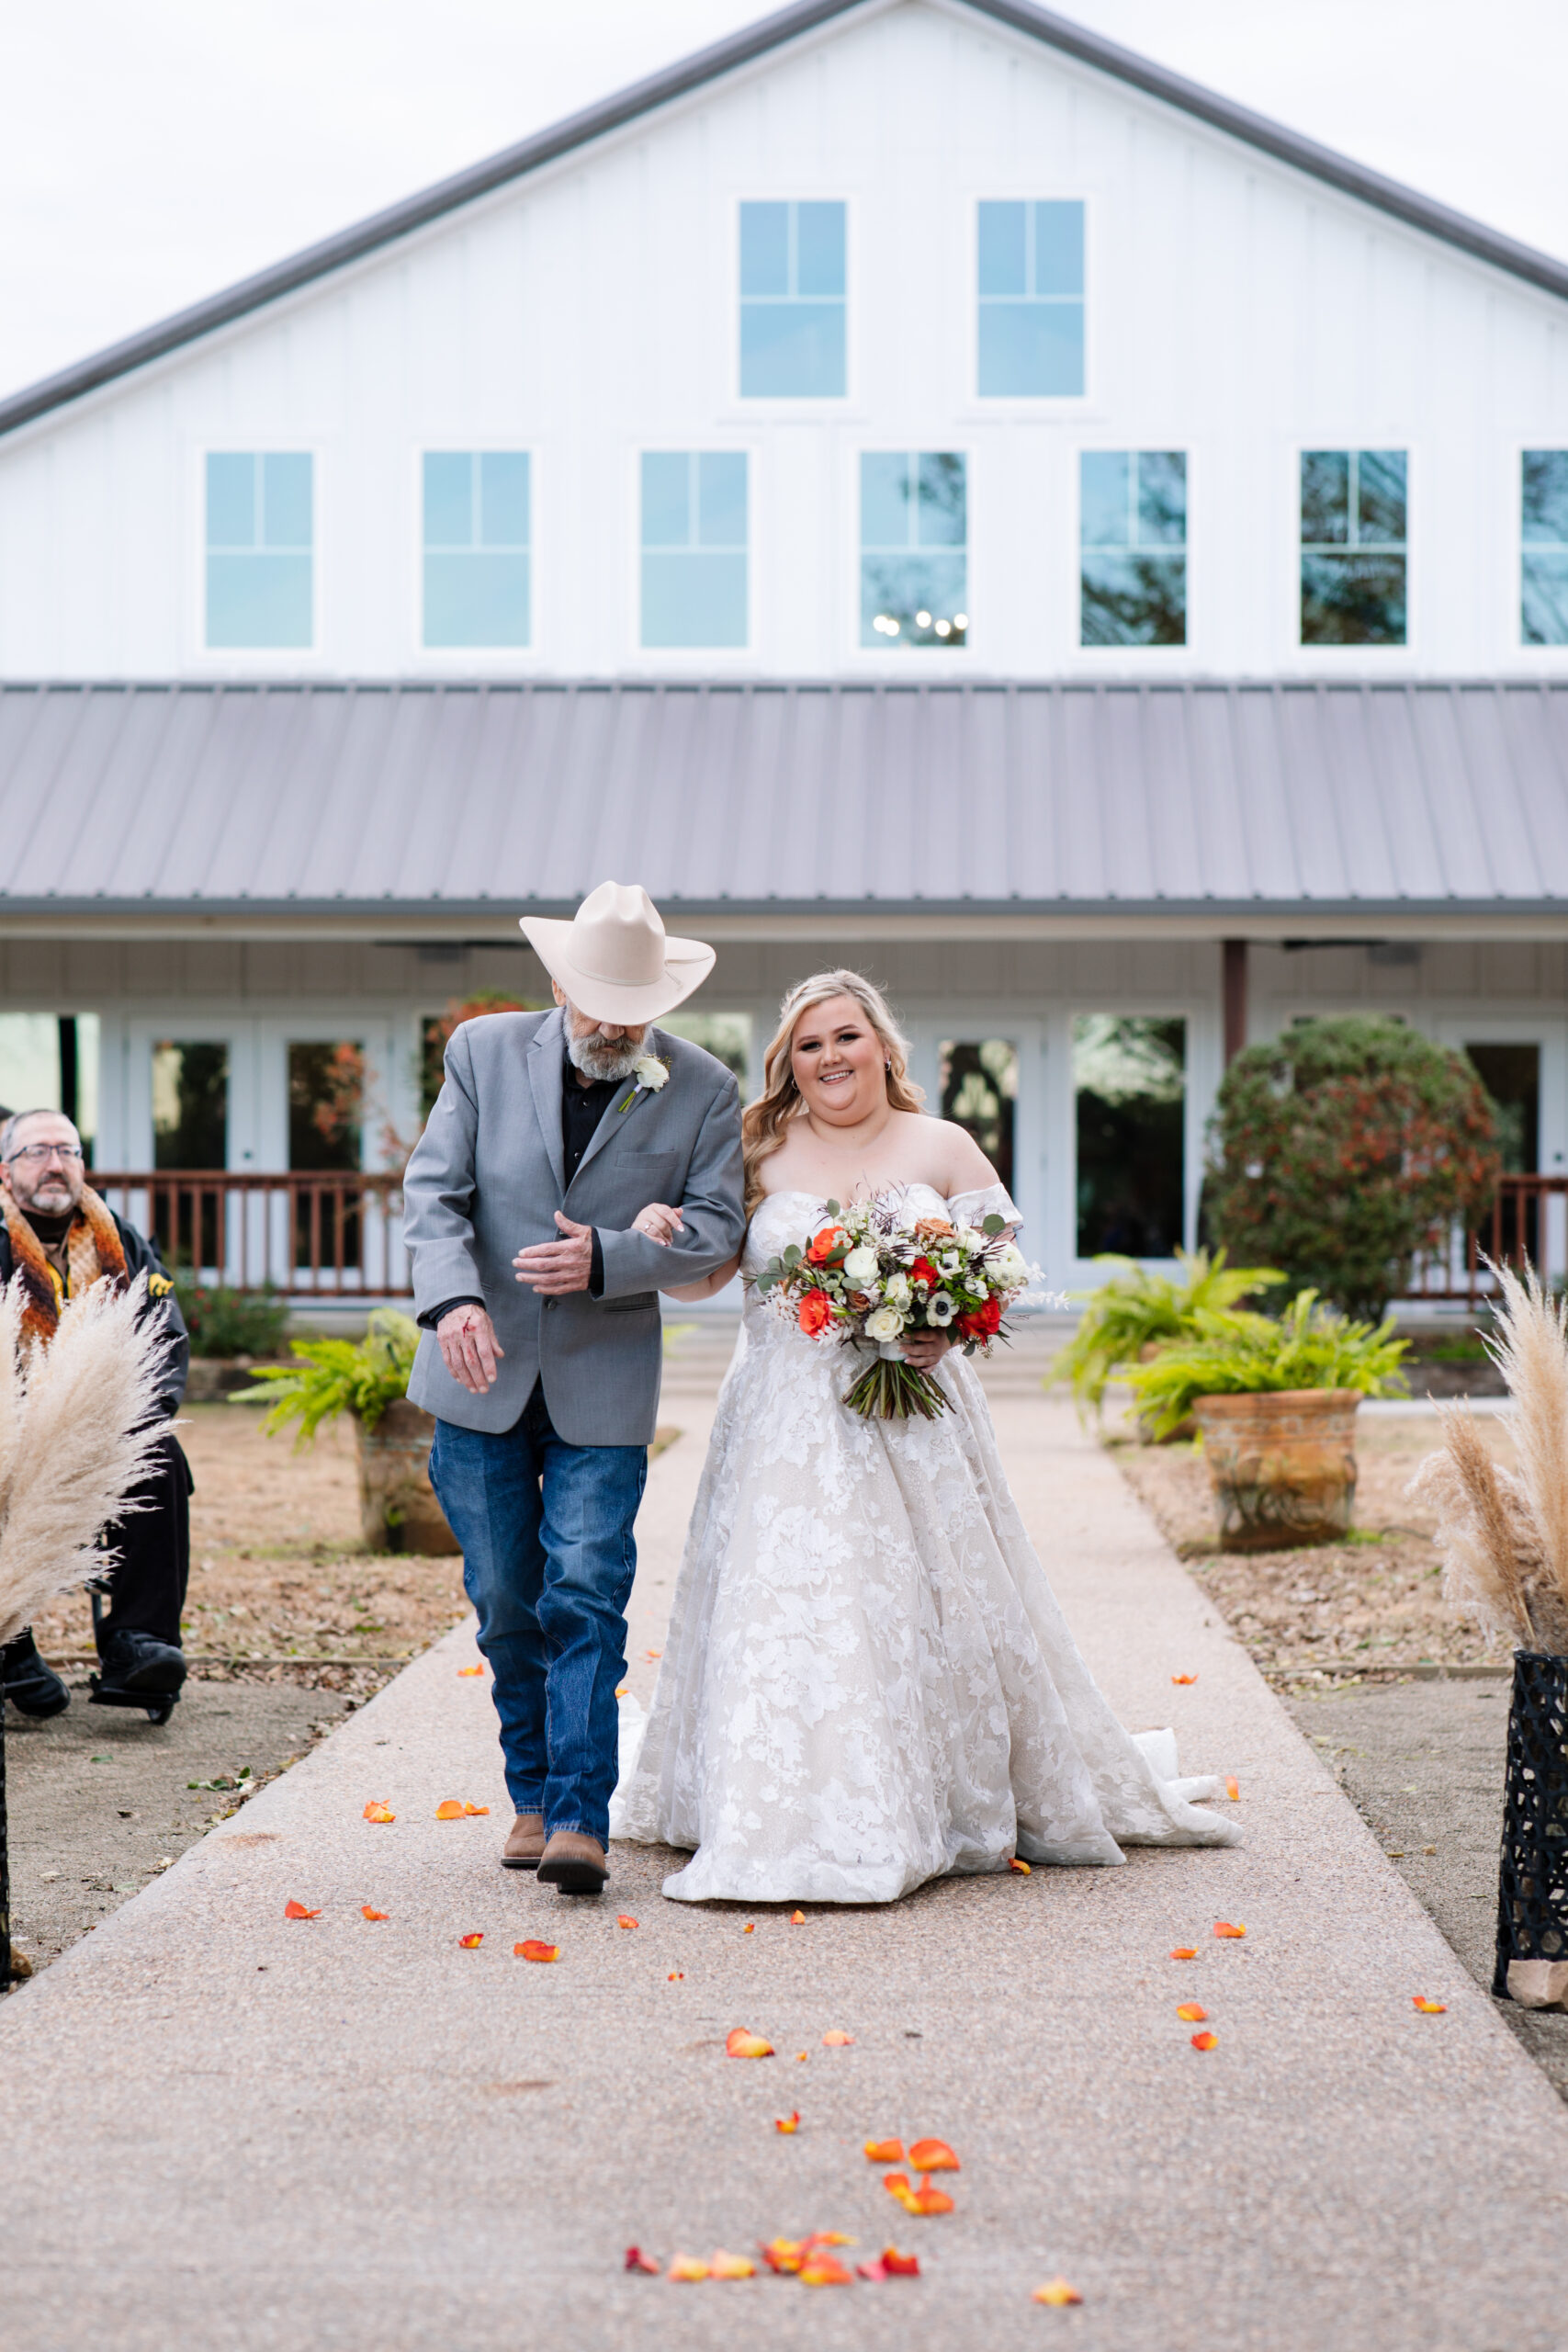 DFW wedding photographer, East Texas wedding photographer, DFW wedding photography packages, The Wildflower Event Venue, DFW wedding venues